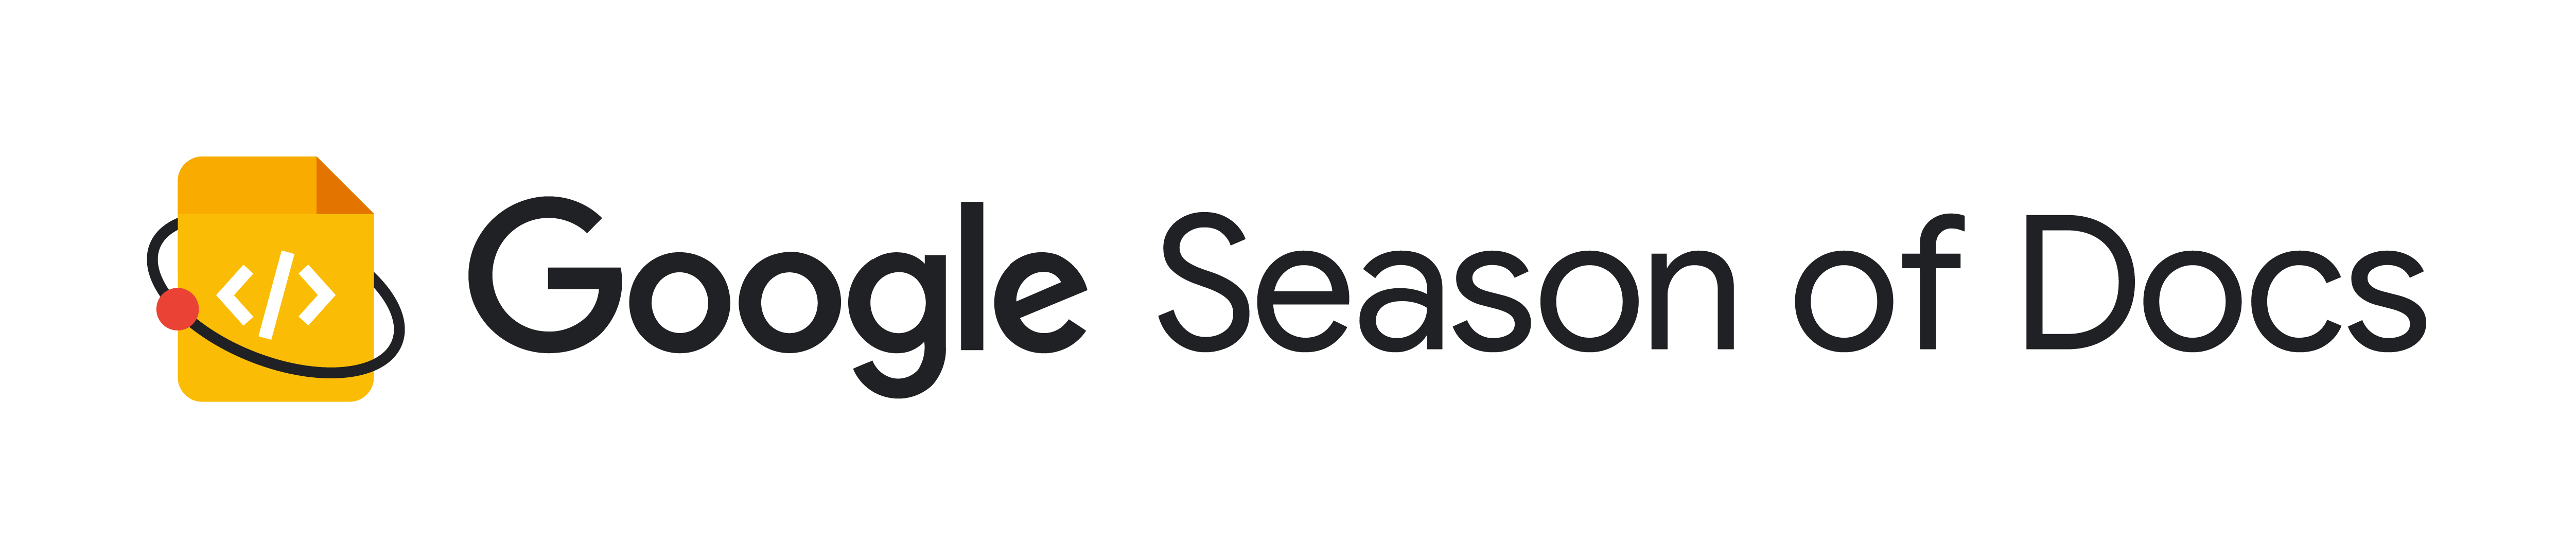 https://developers.google.com/static/season-of-docs/images/logo/SeasonOfDocs_Logo.png